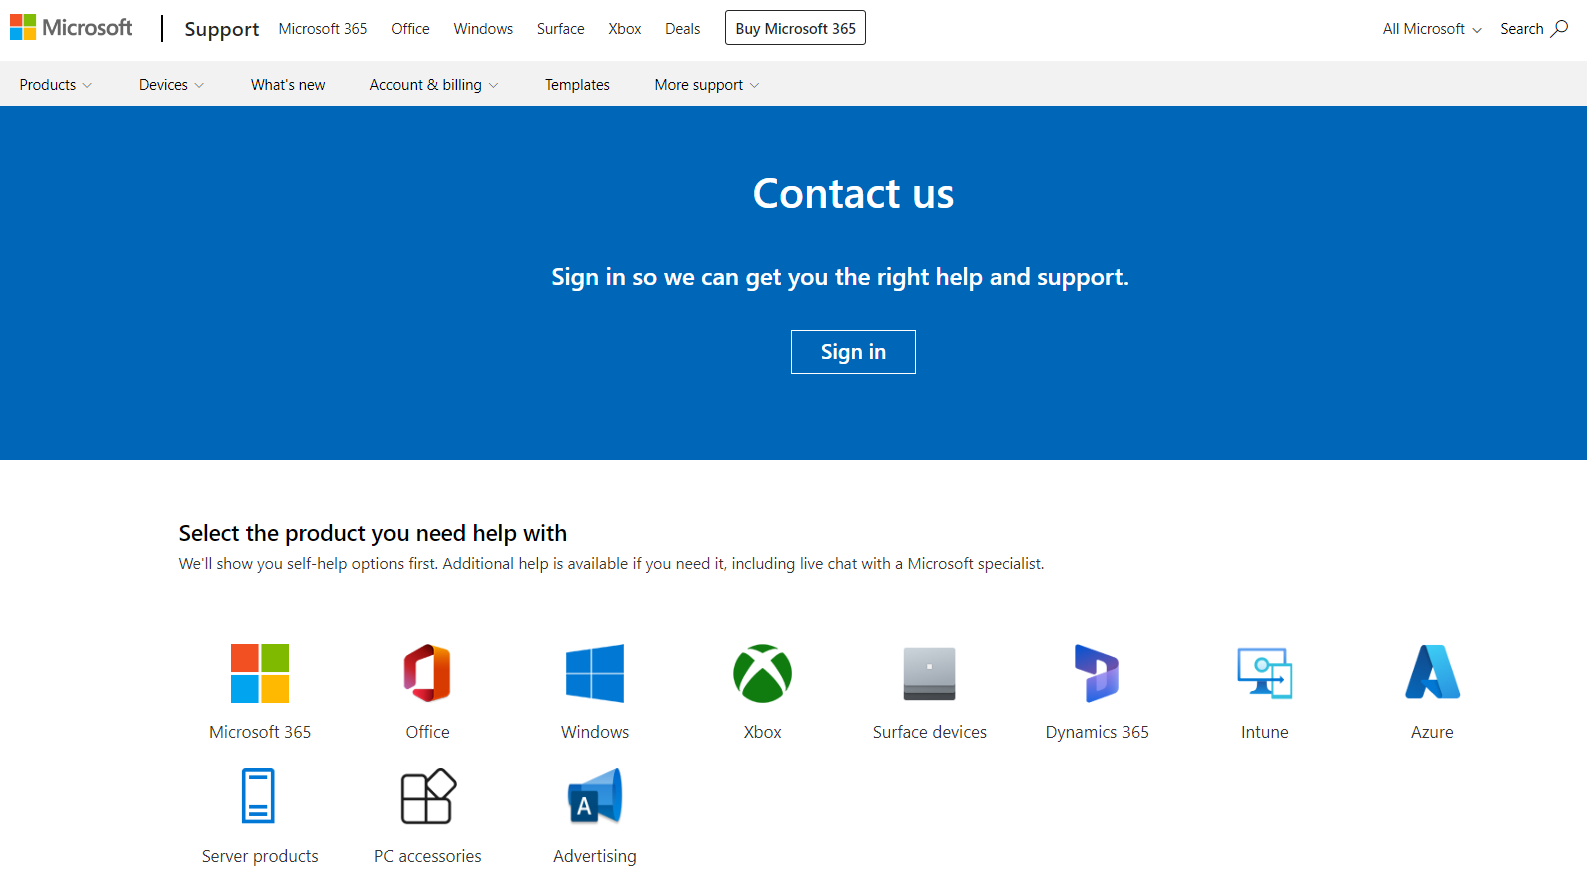 Microsoft Contact Us page